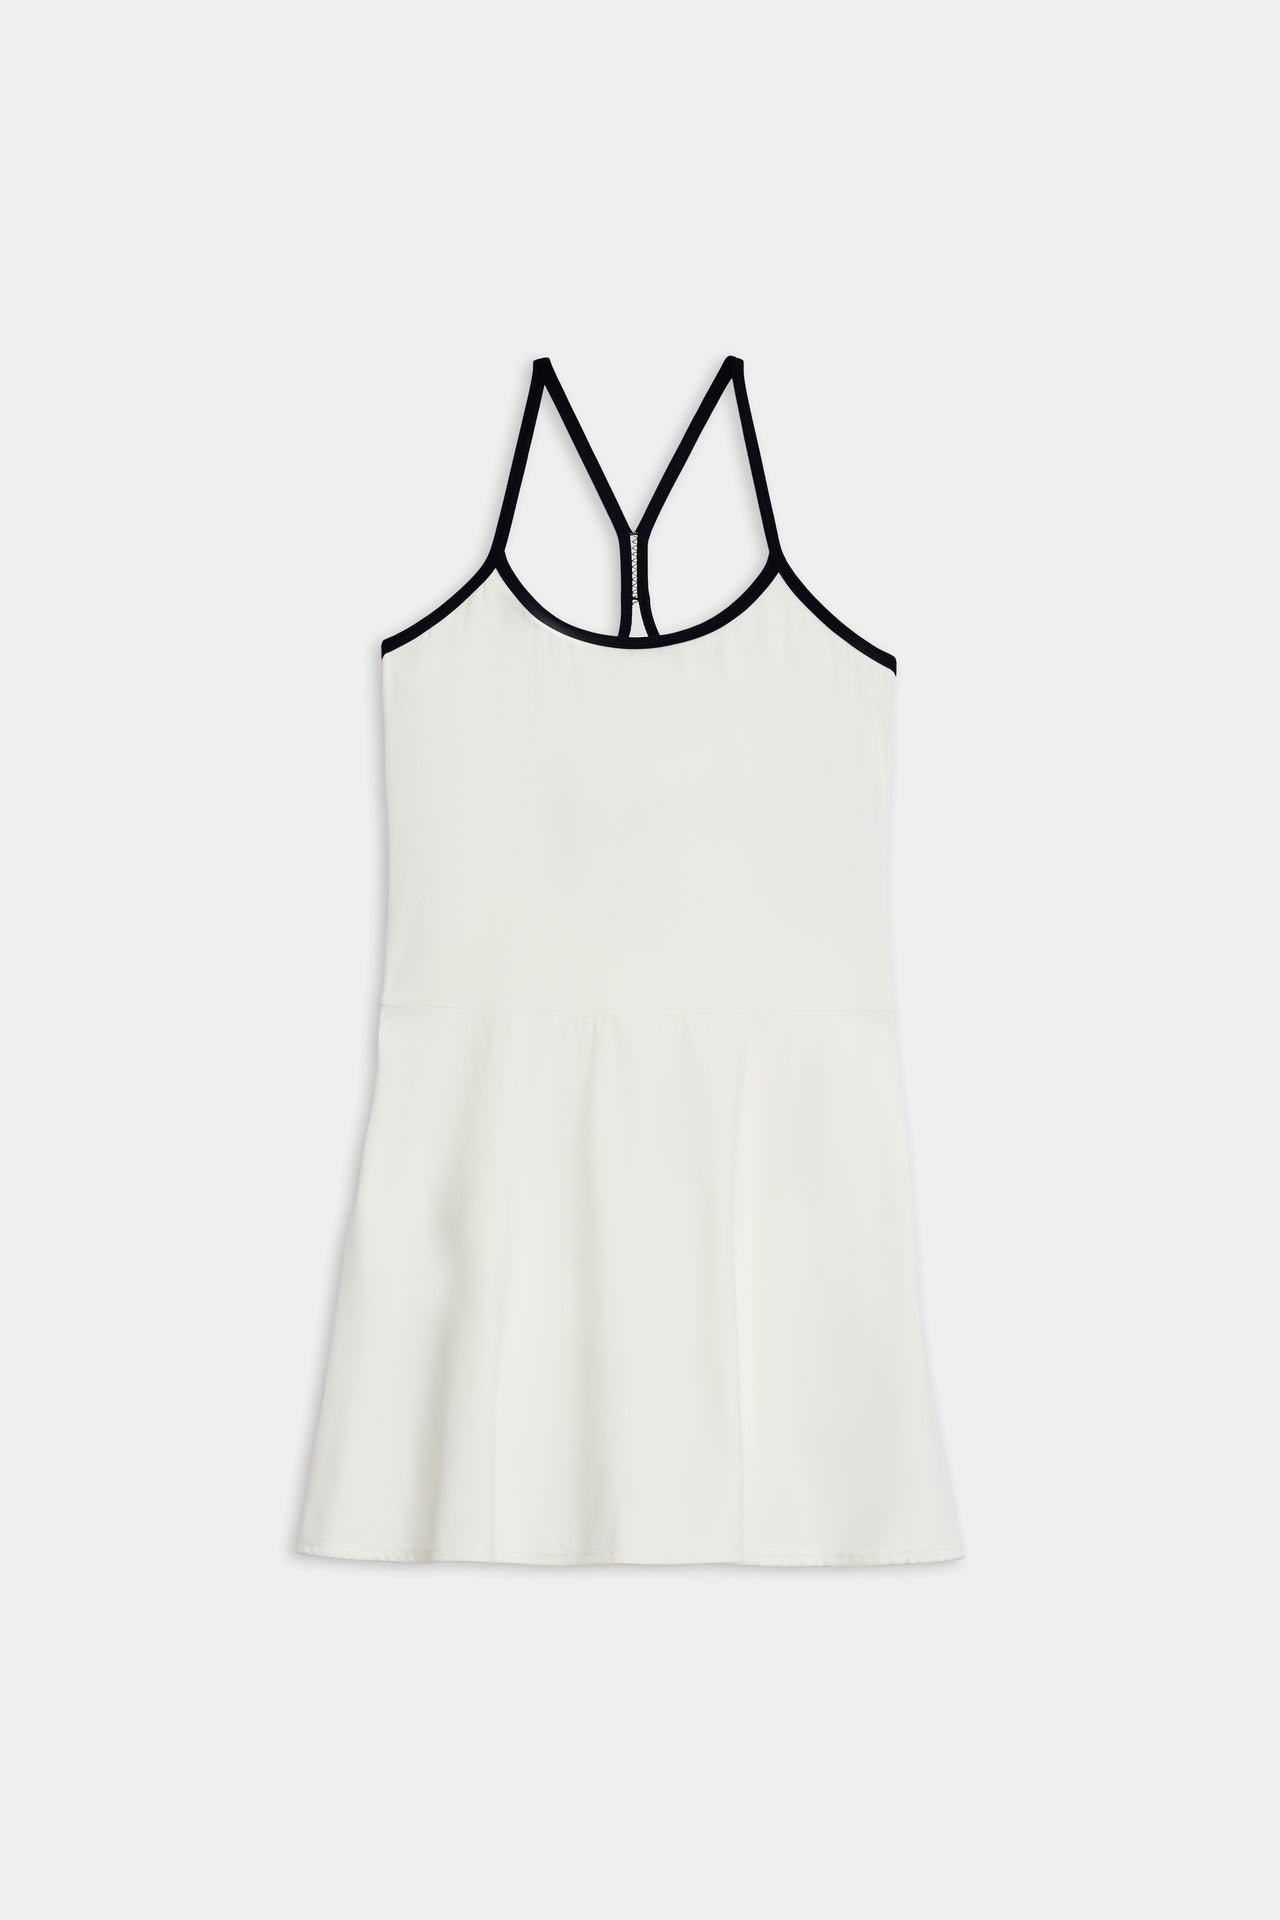 A sleeveless white nylon top with black trim on a plain background, reminiscent of the Simona Airweight Tank Dress - White/Indigo by SPLITS59.